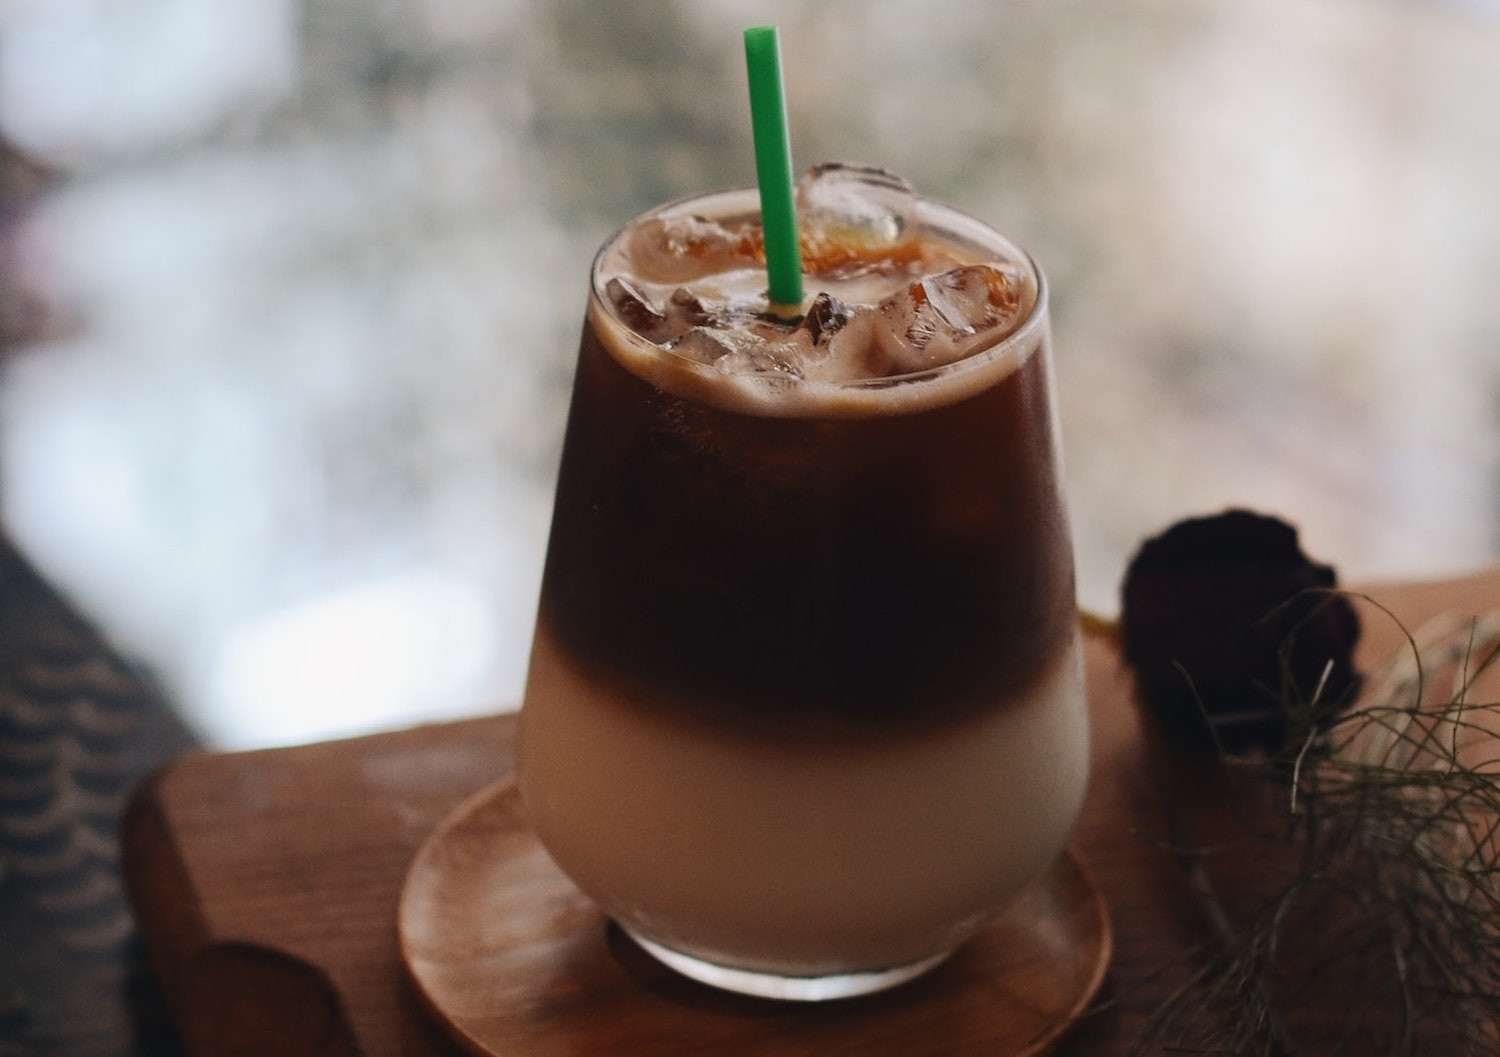 How to Make Shakerato: Italian Iced Coffee – The Travel Bite